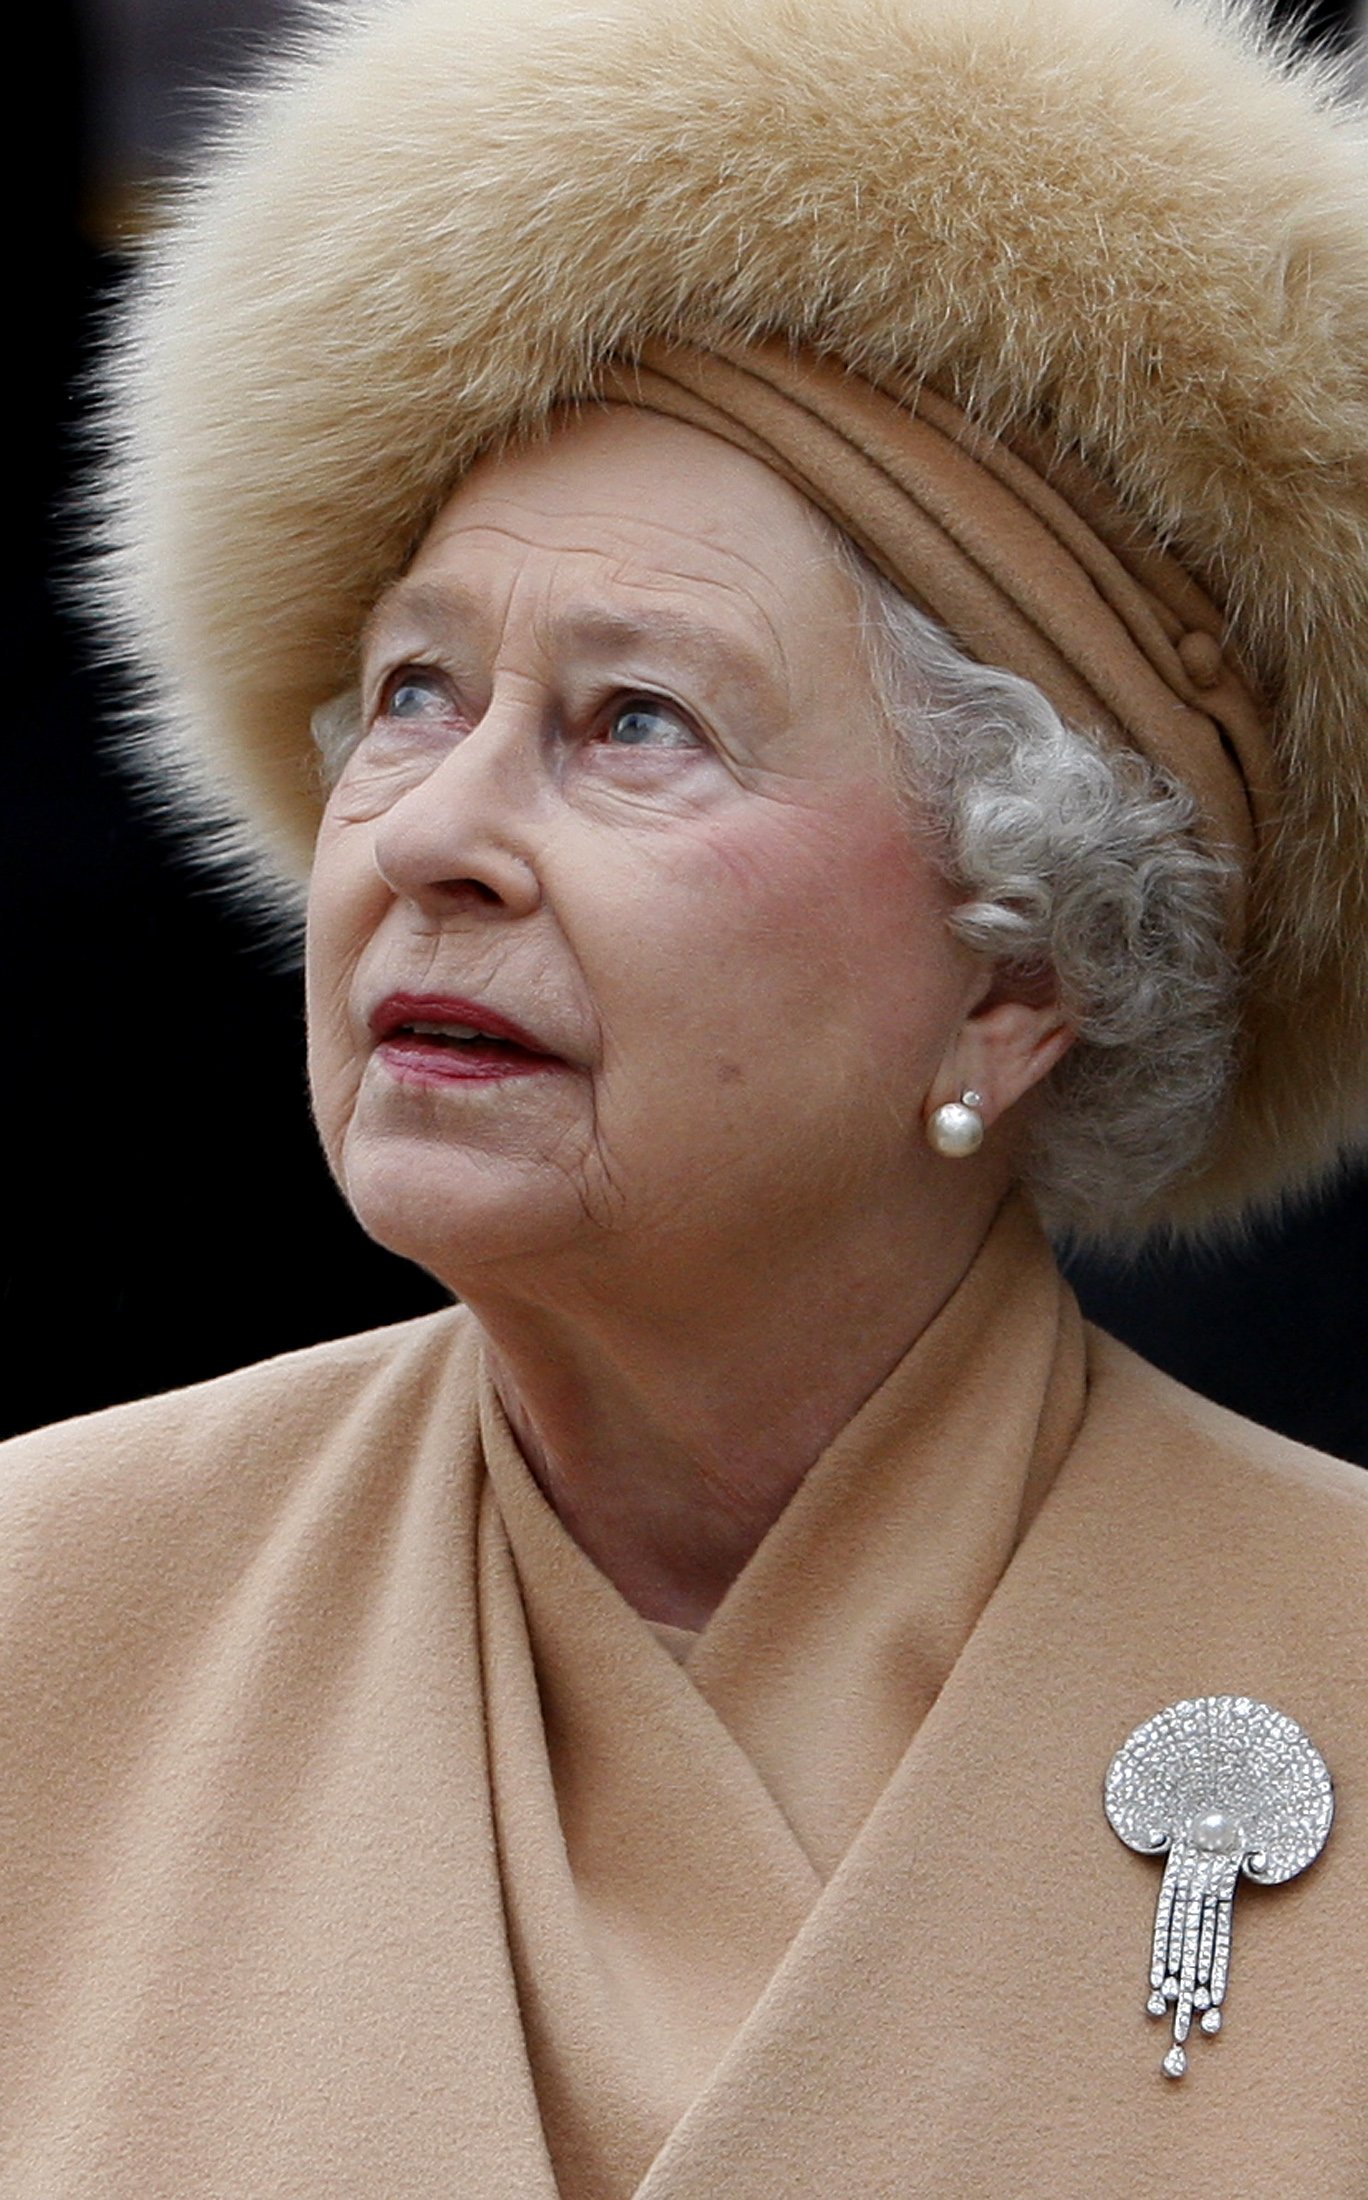 Königin Elizabeth II. in London 2019. | Quelle: Getty Images 